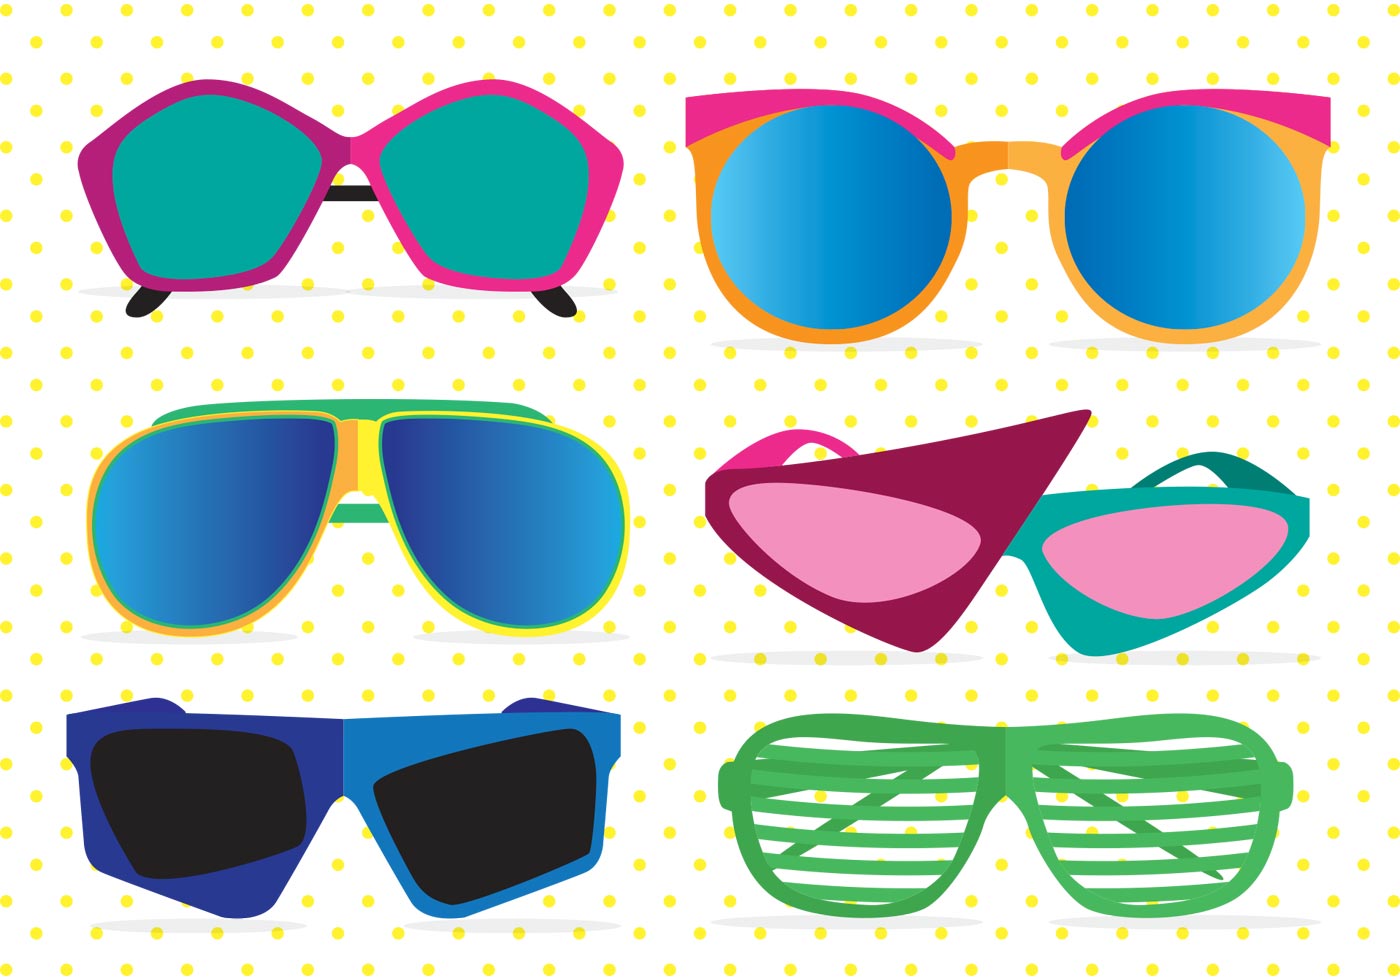 An s sunglasses. Цветные очки. Яркие очки. Солнечные очки. Очки иллюстрация.